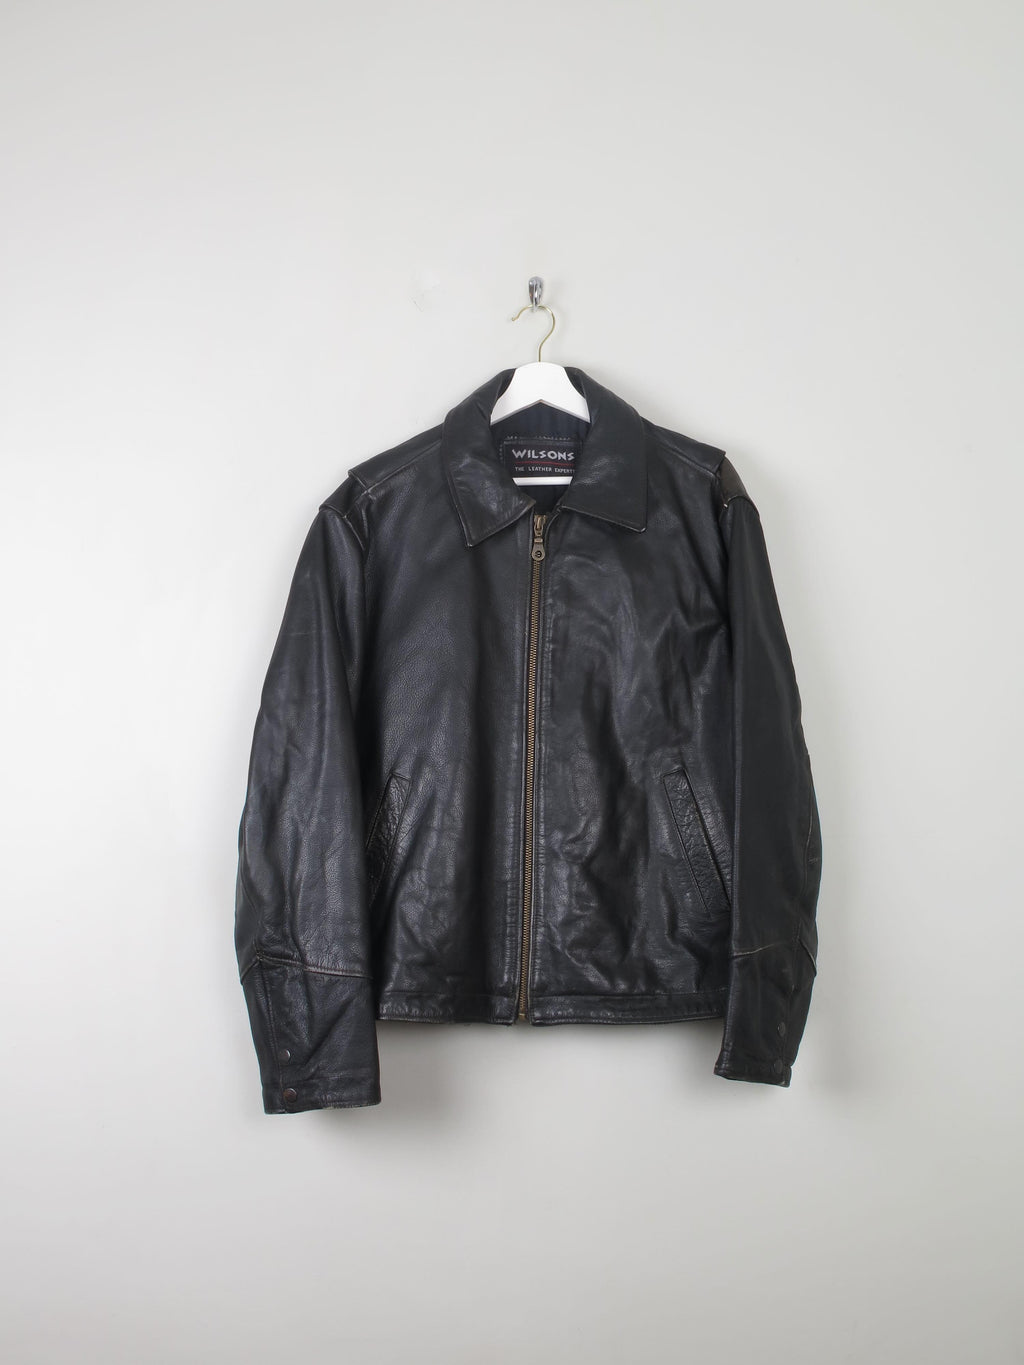 Men's Black Leather BIker Jacket By Wilsons M - The Harlequin